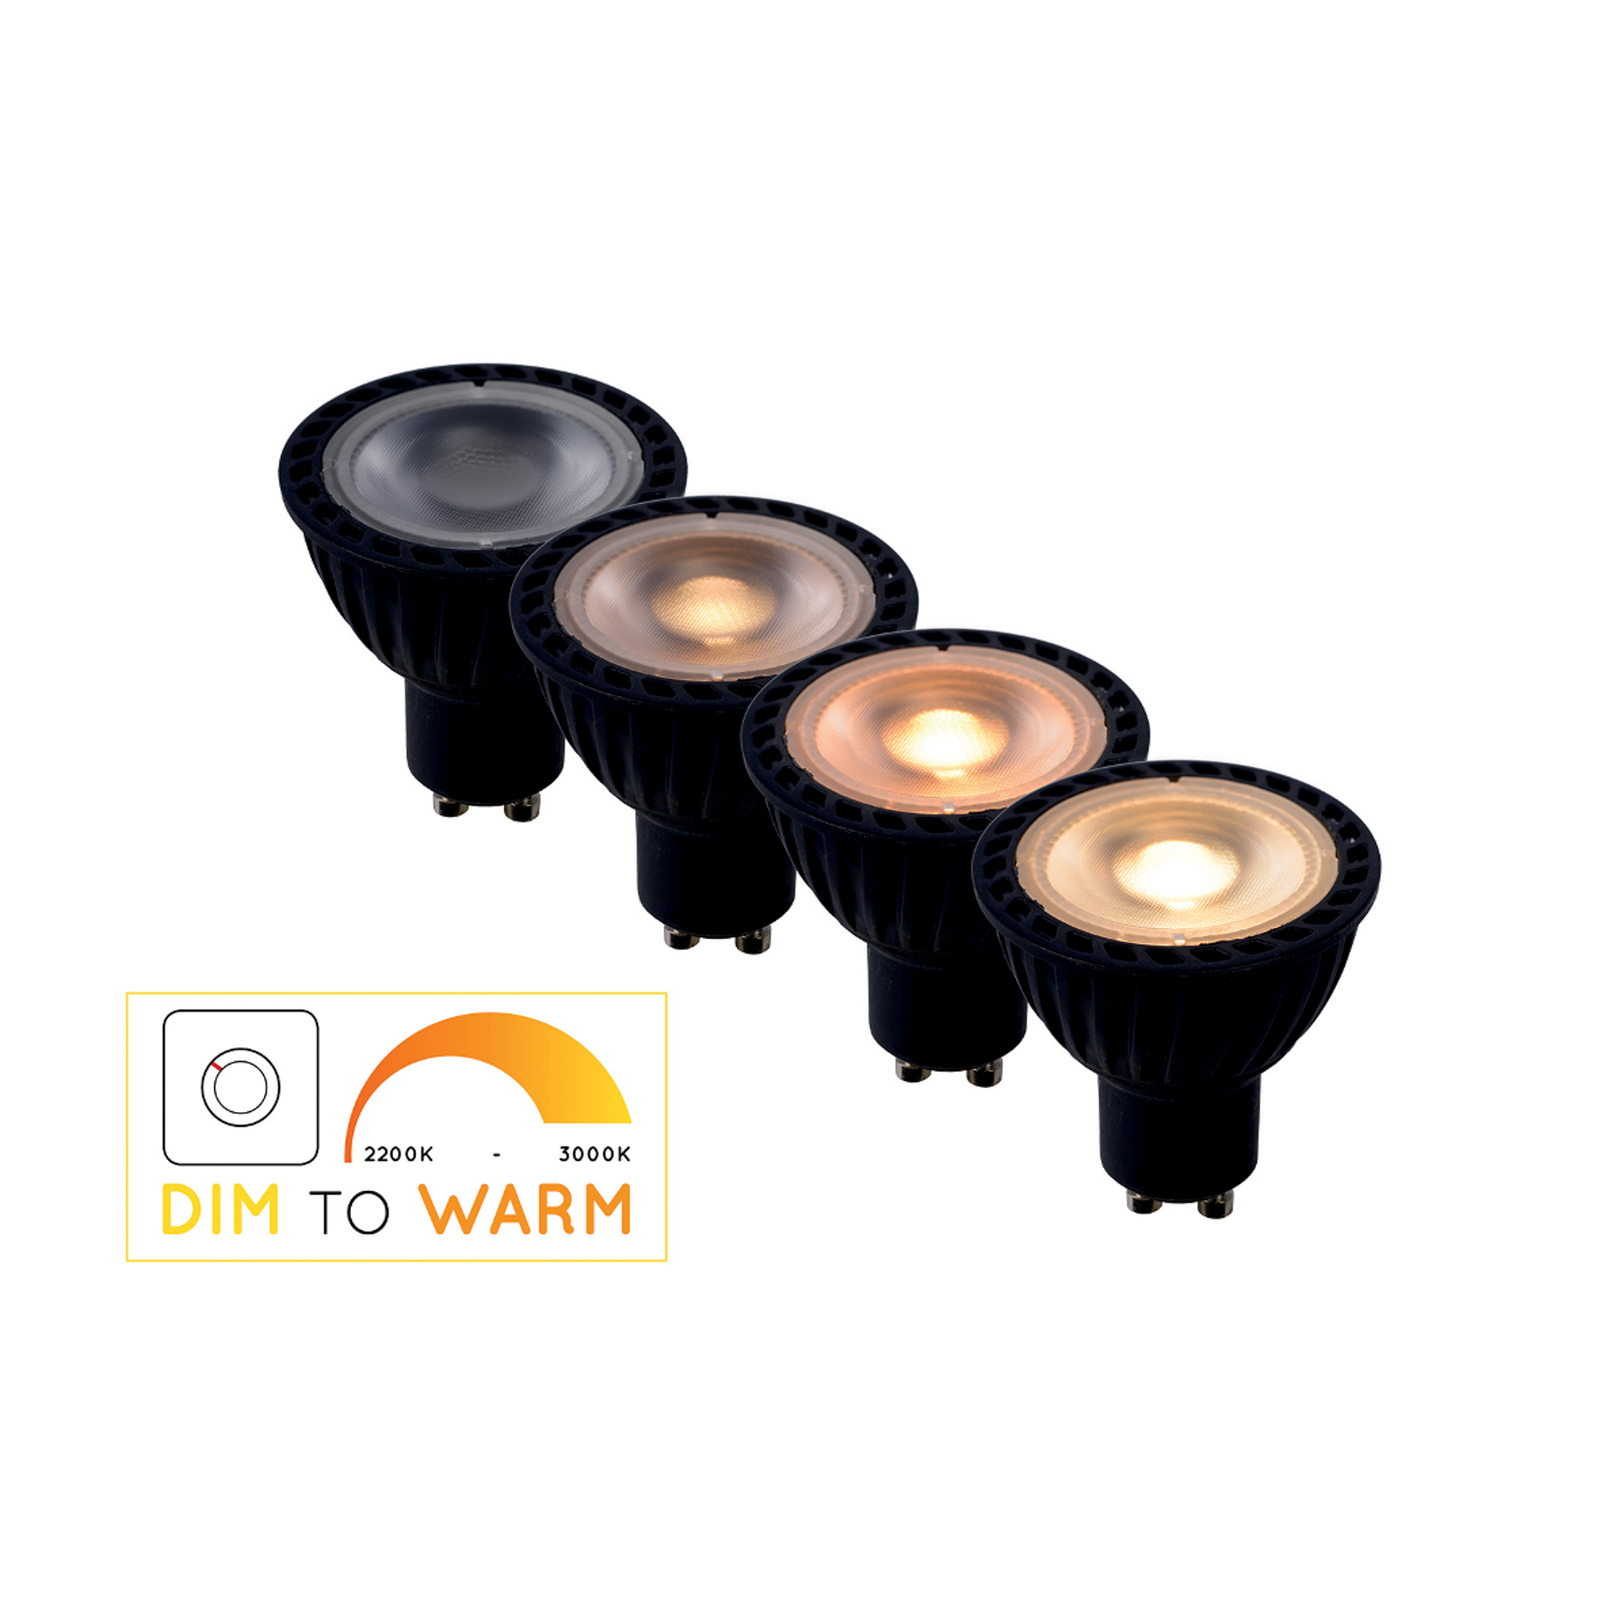 LED-reflector GU10 5W Dim to warm, zwart